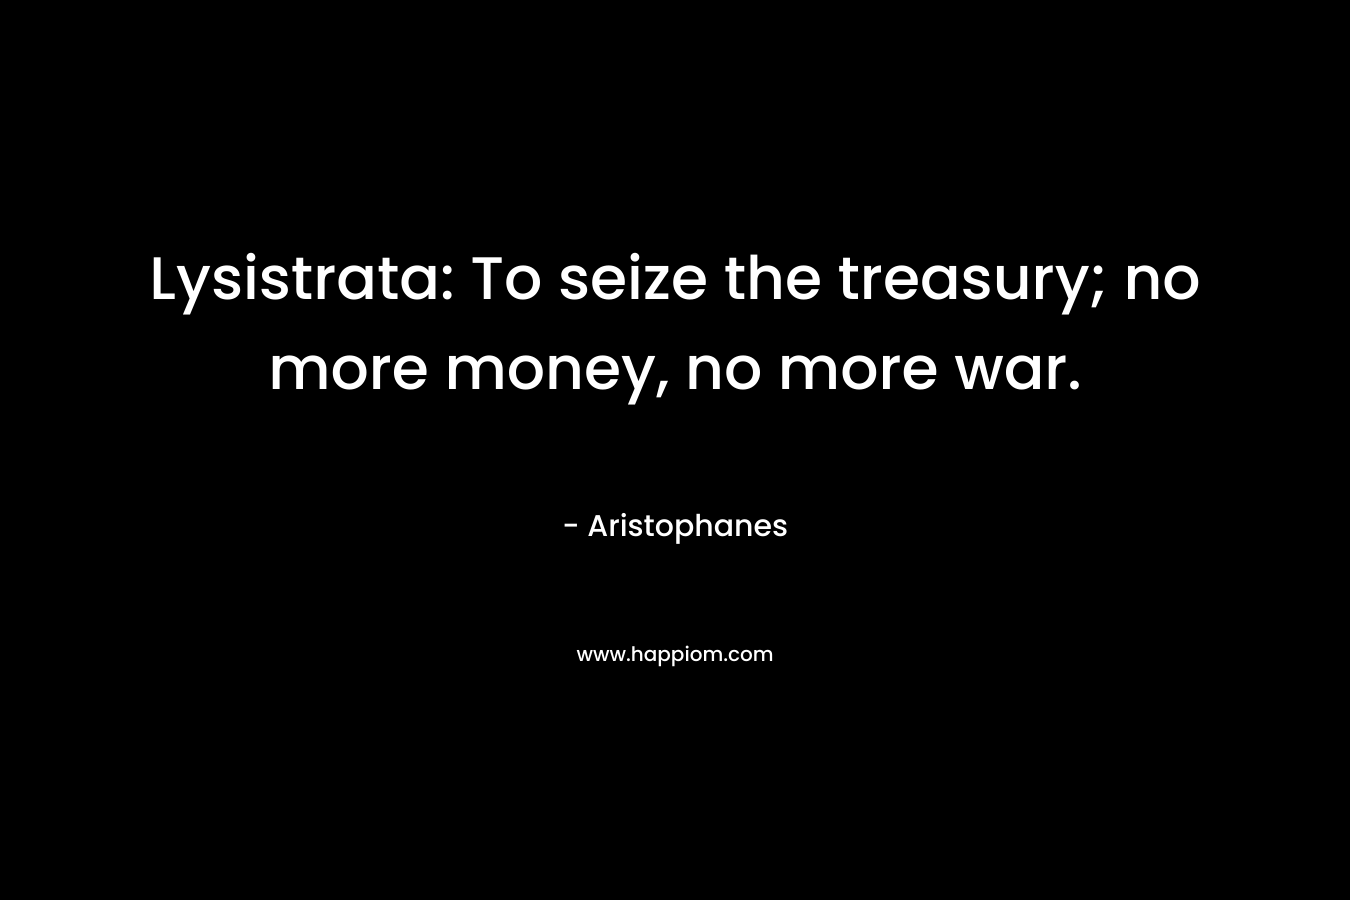 Lysistrata: To seize the treasury; no more money, no more war.